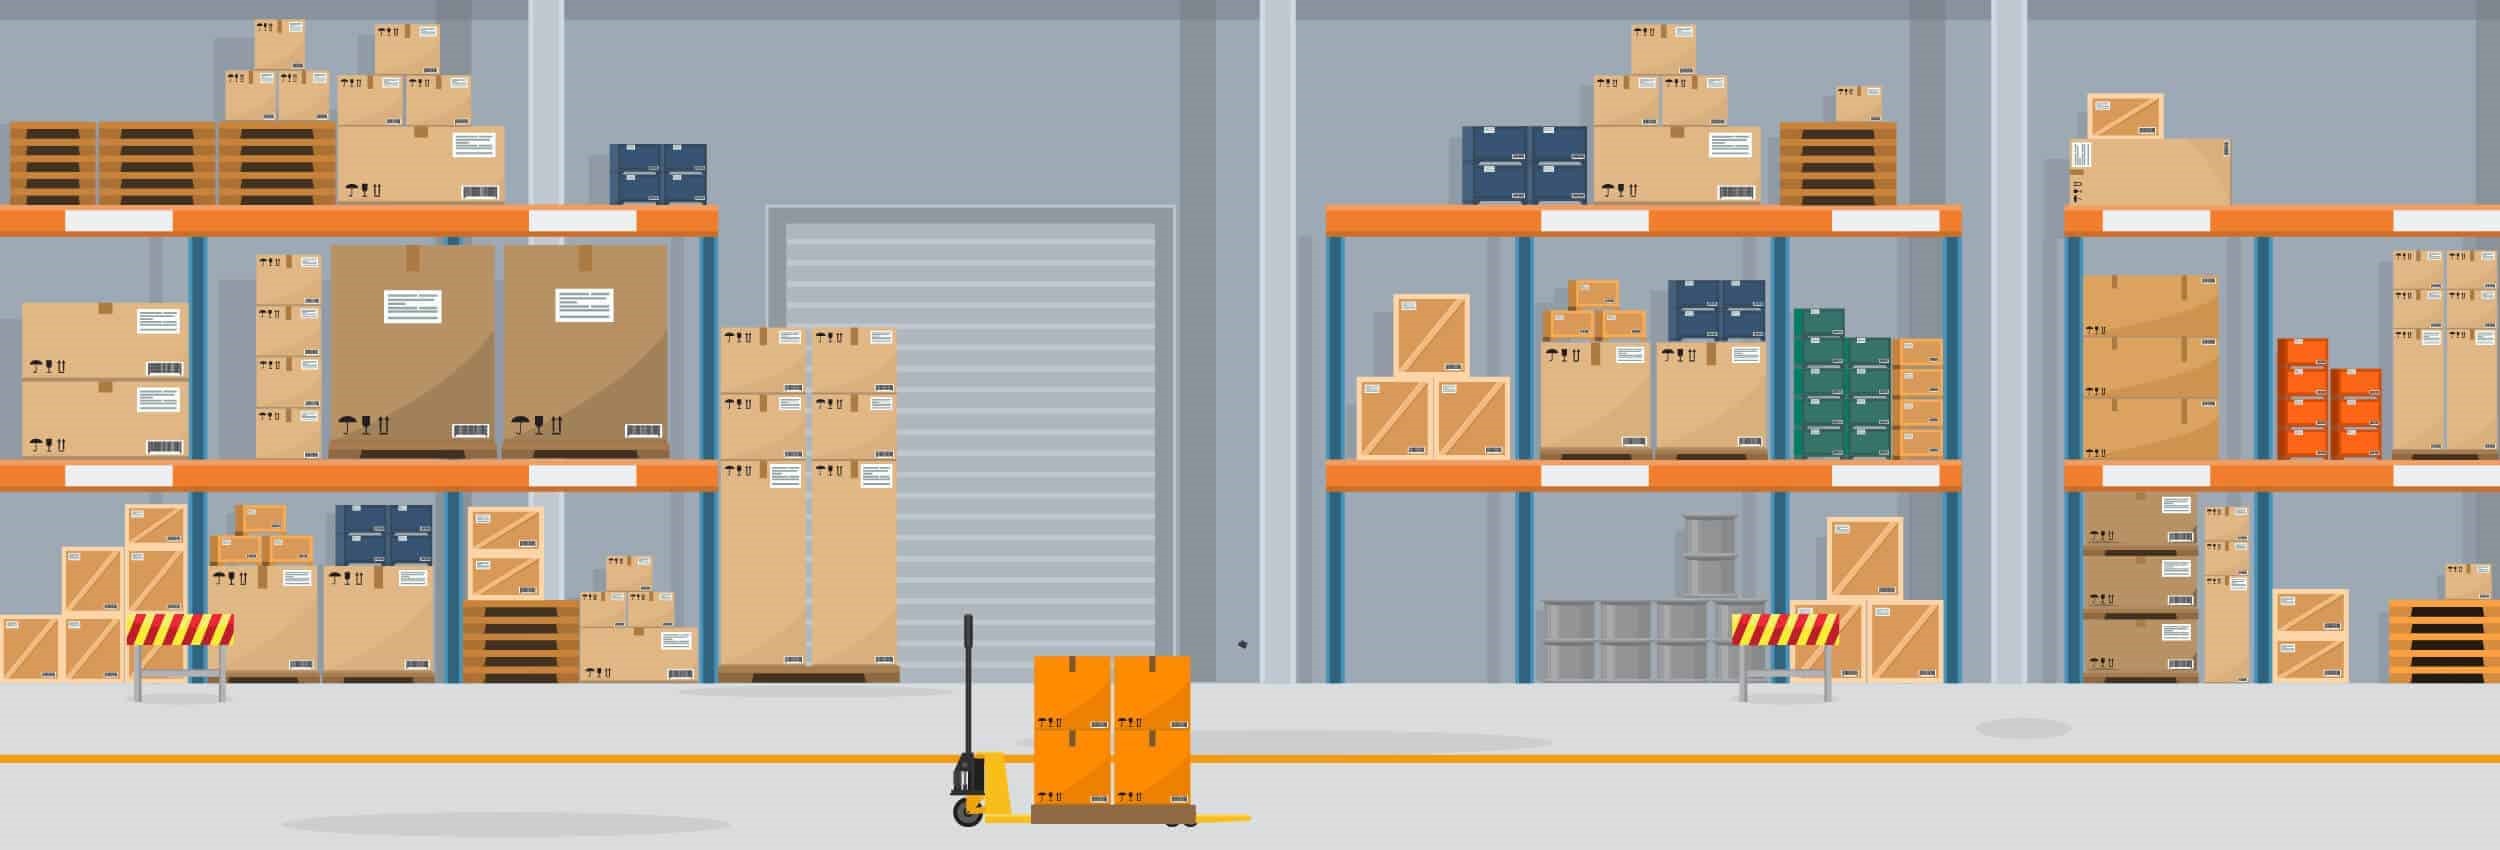 Improving warehouse efficiency